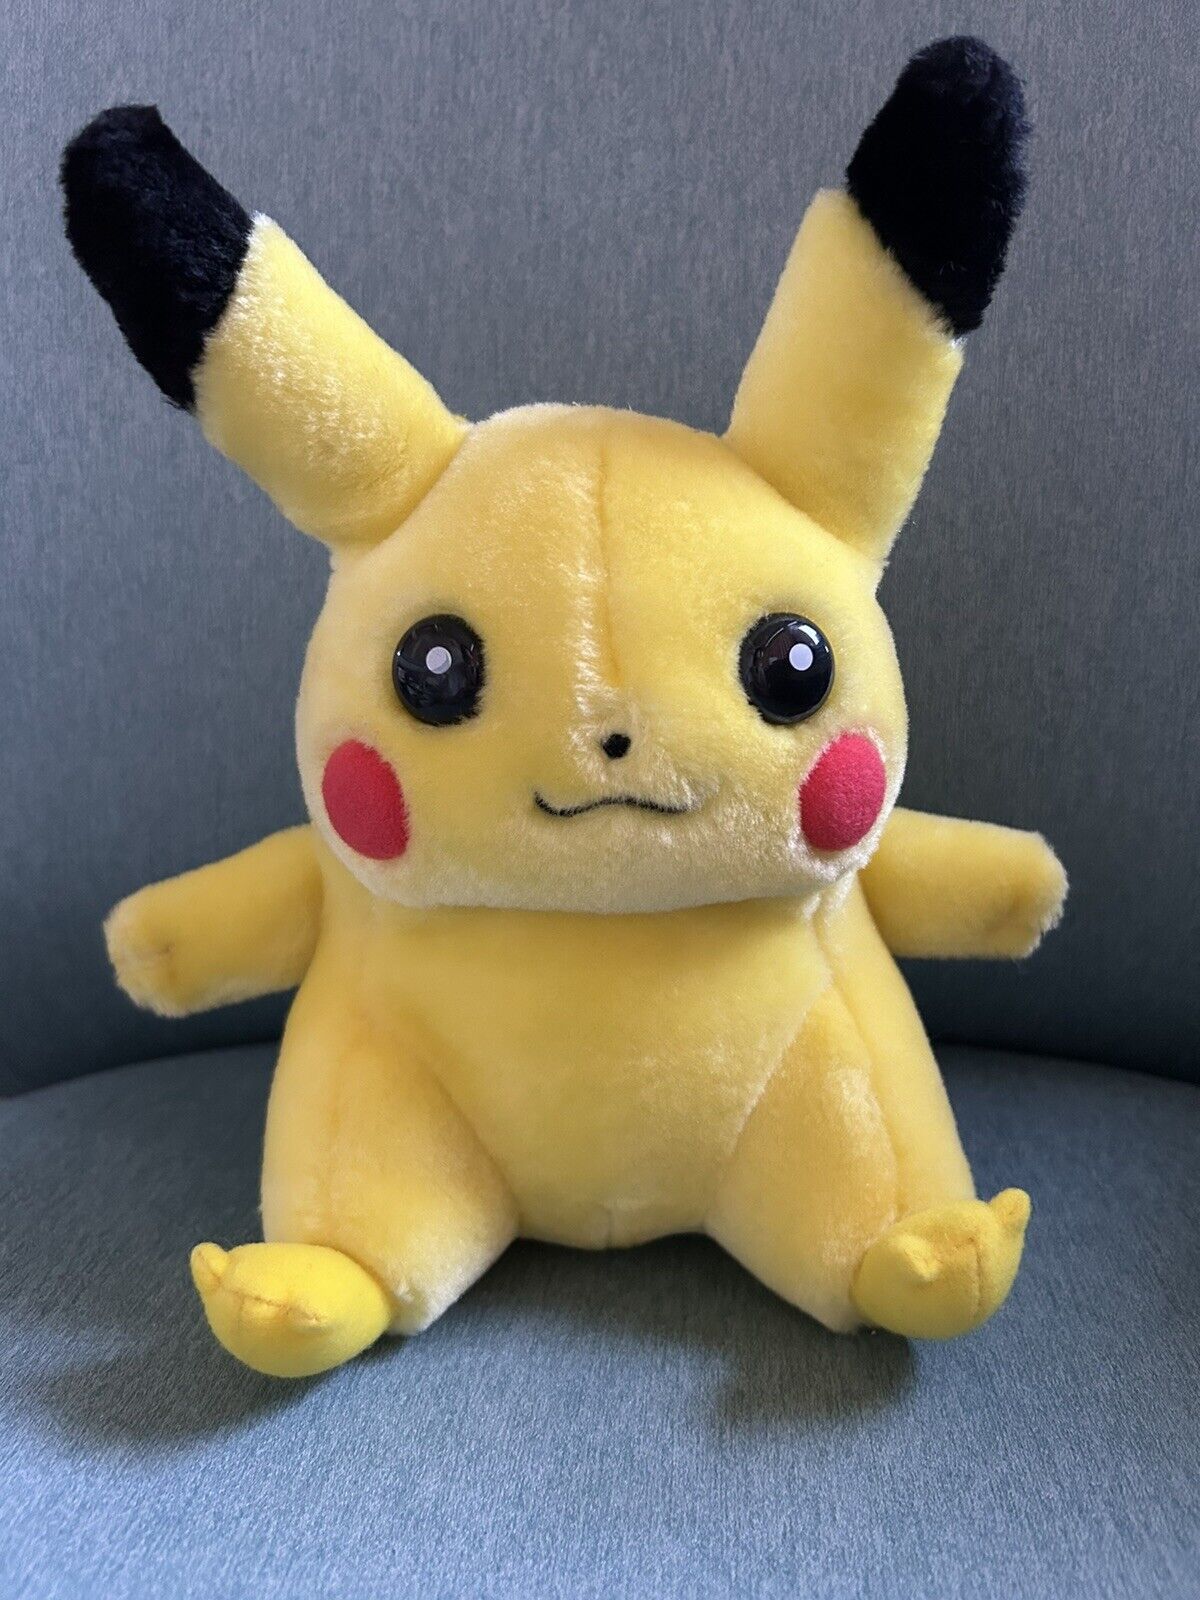 1998 Nintendo Pikachu Pokémon 8 Inch Plush Toy Stuffed Animal Vintage Hasbro